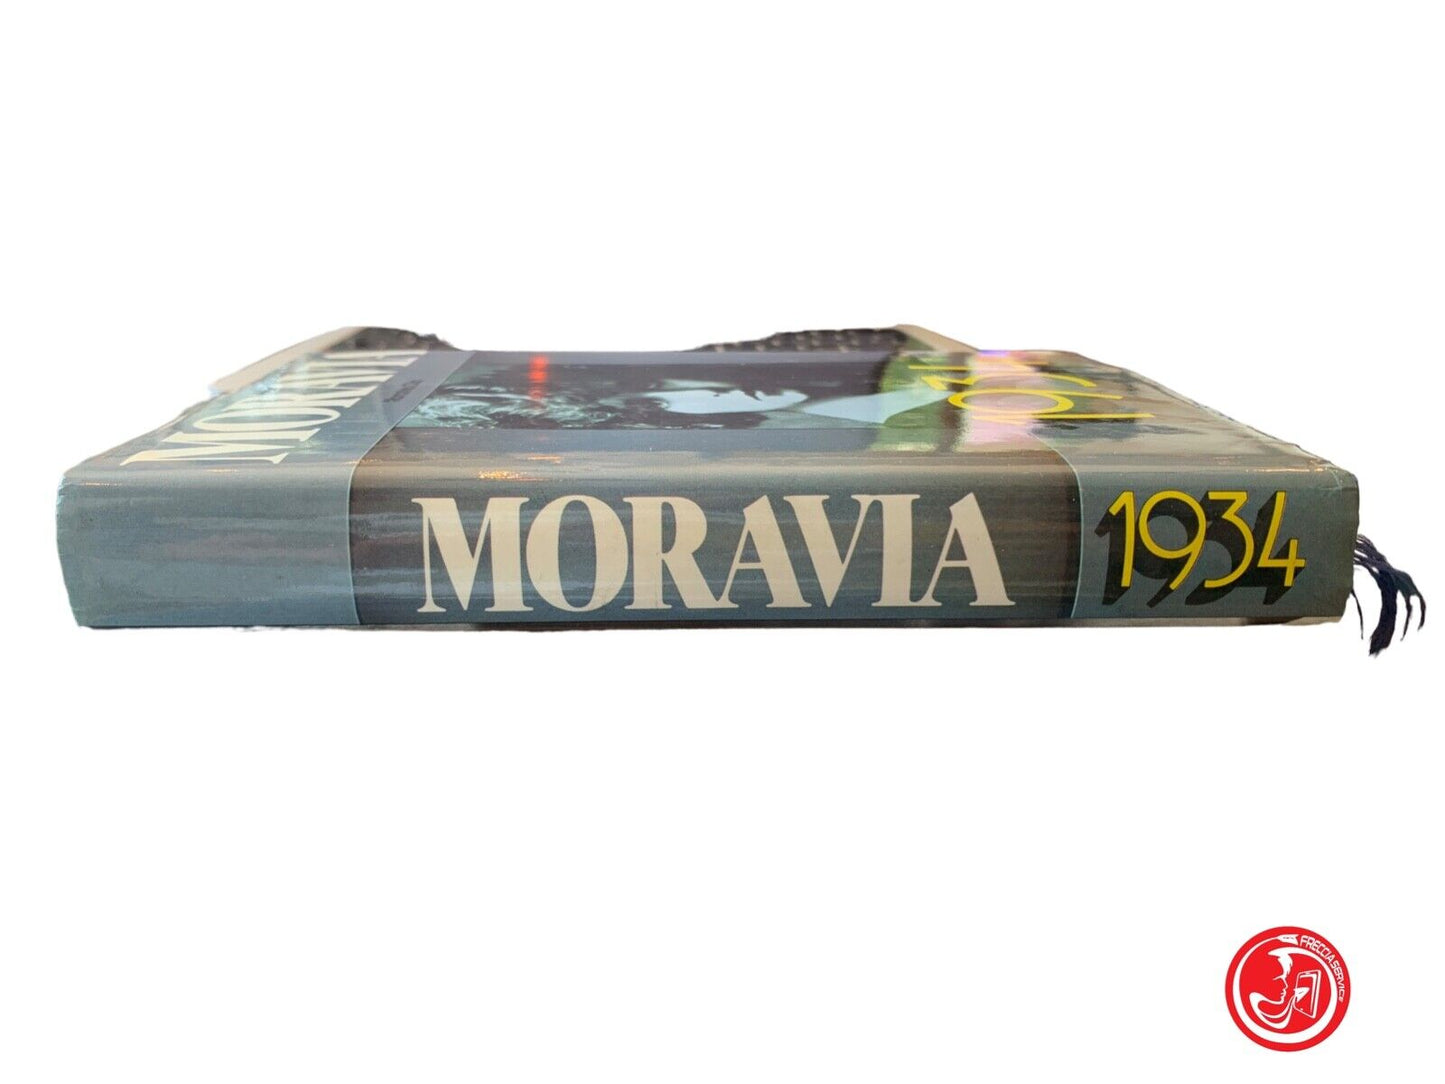 1934 - Moravia - Fiction Club 1982